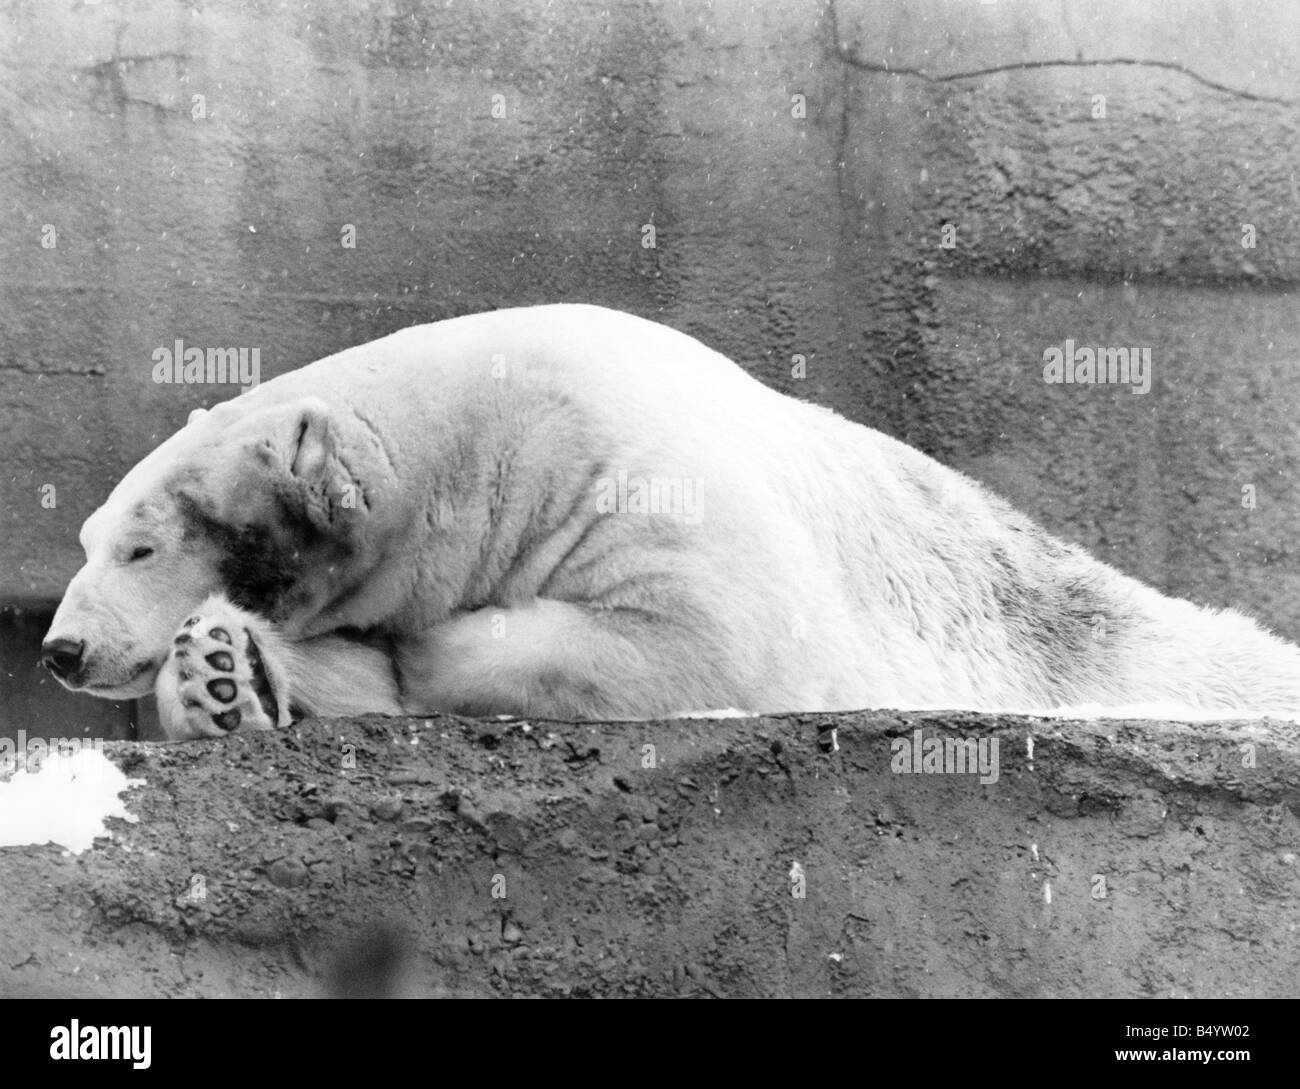 Animali - - orsi polari. Letargico....un orso polare snoozing allo Zoo. Gennaio 1985 P000368 Foto Stock